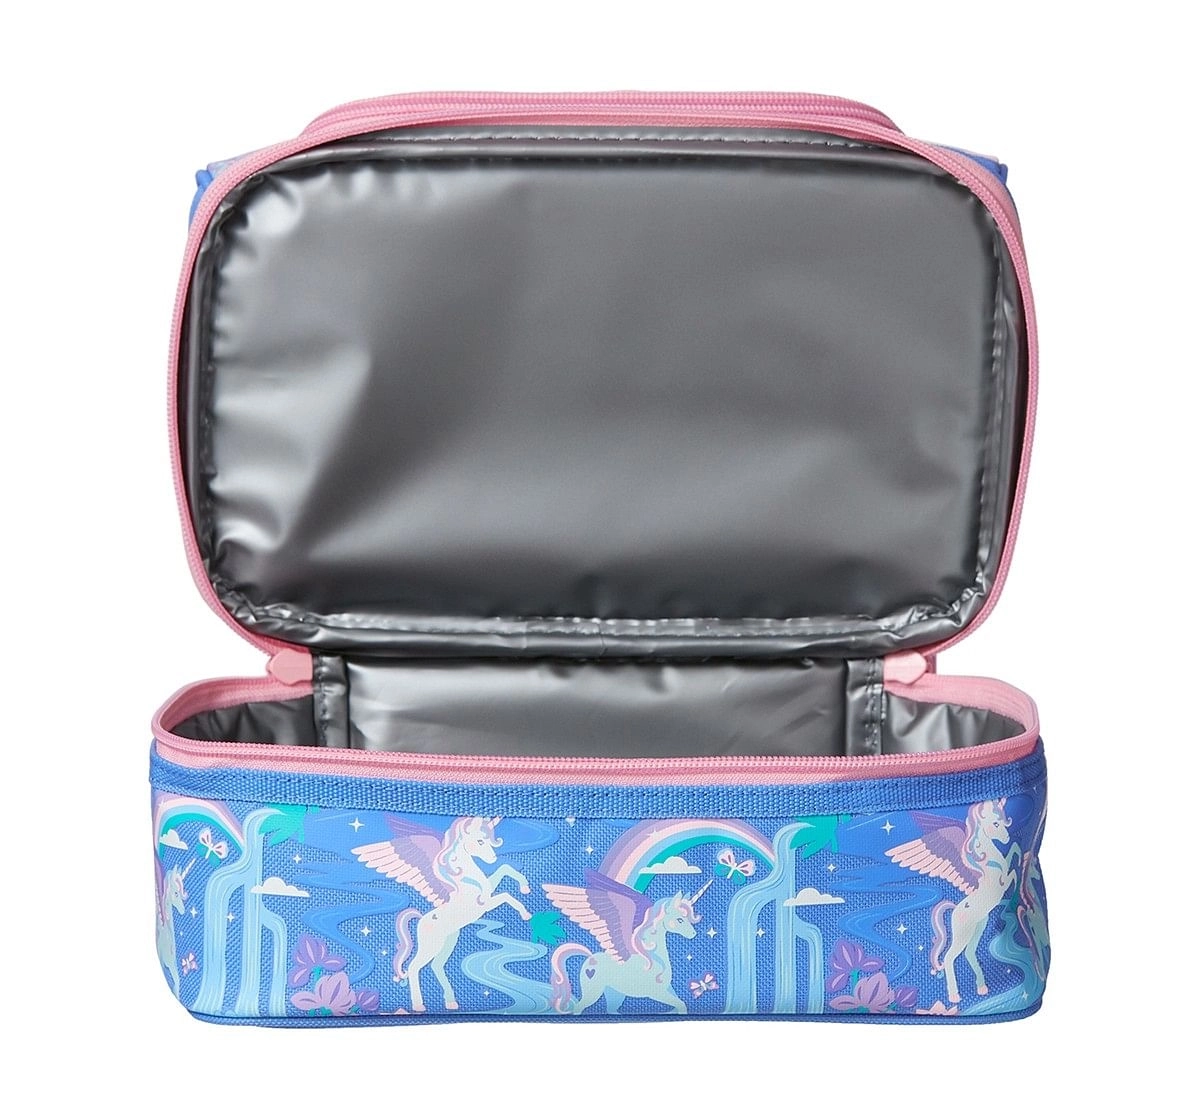 Smiggle Far Away Double Decker Lunchbox - Unicorn Print Bags for Kids age 3Y+ (Cornflower Blue)